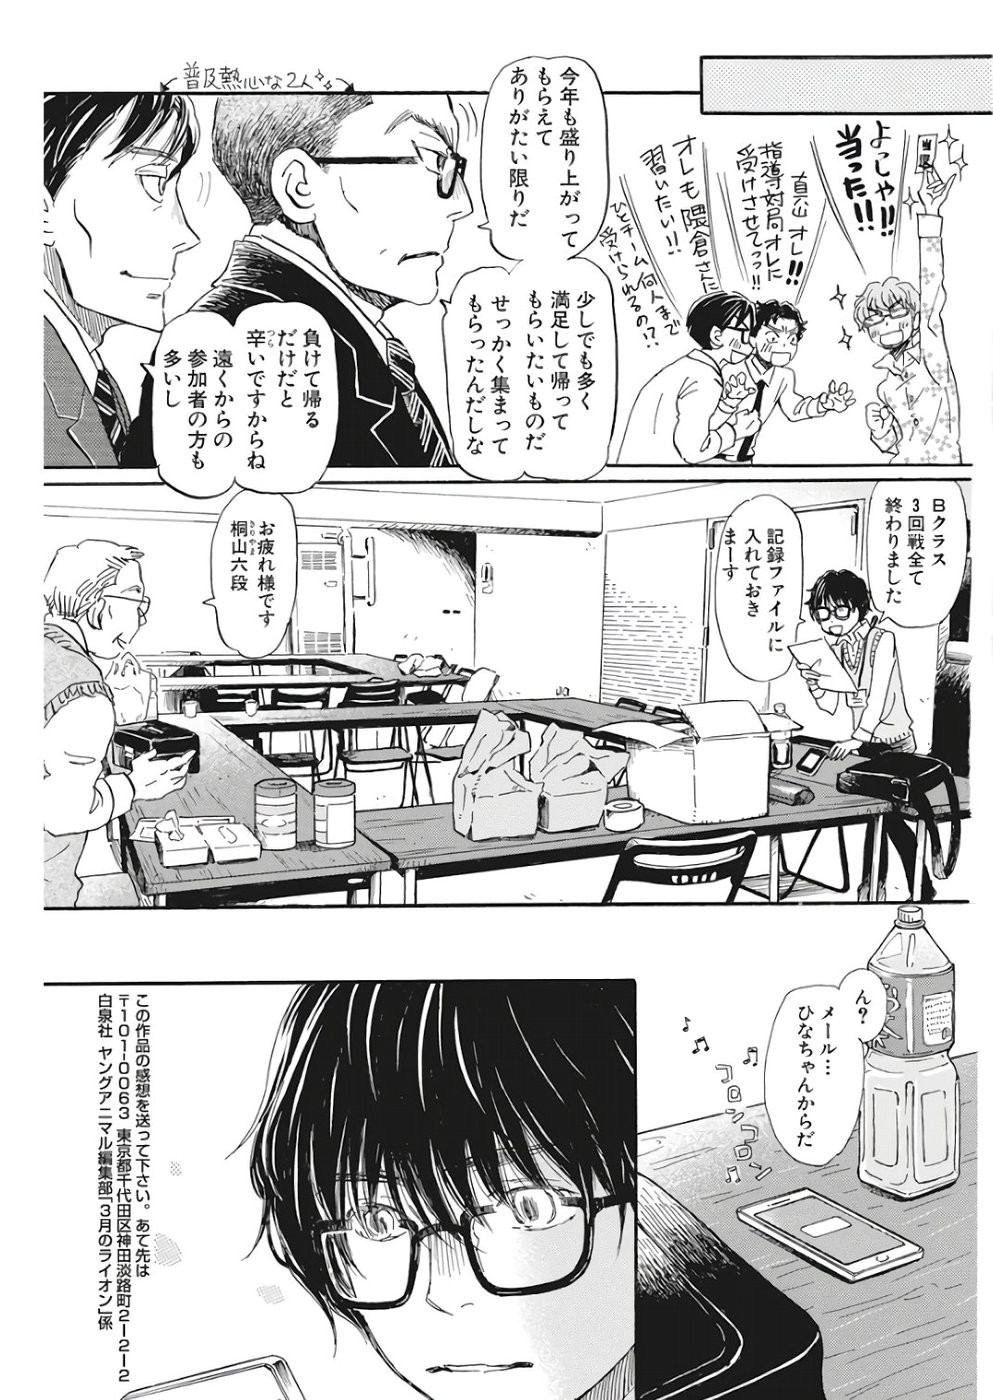 3 Gatsu no Lion - Chapter 151 - Page 9